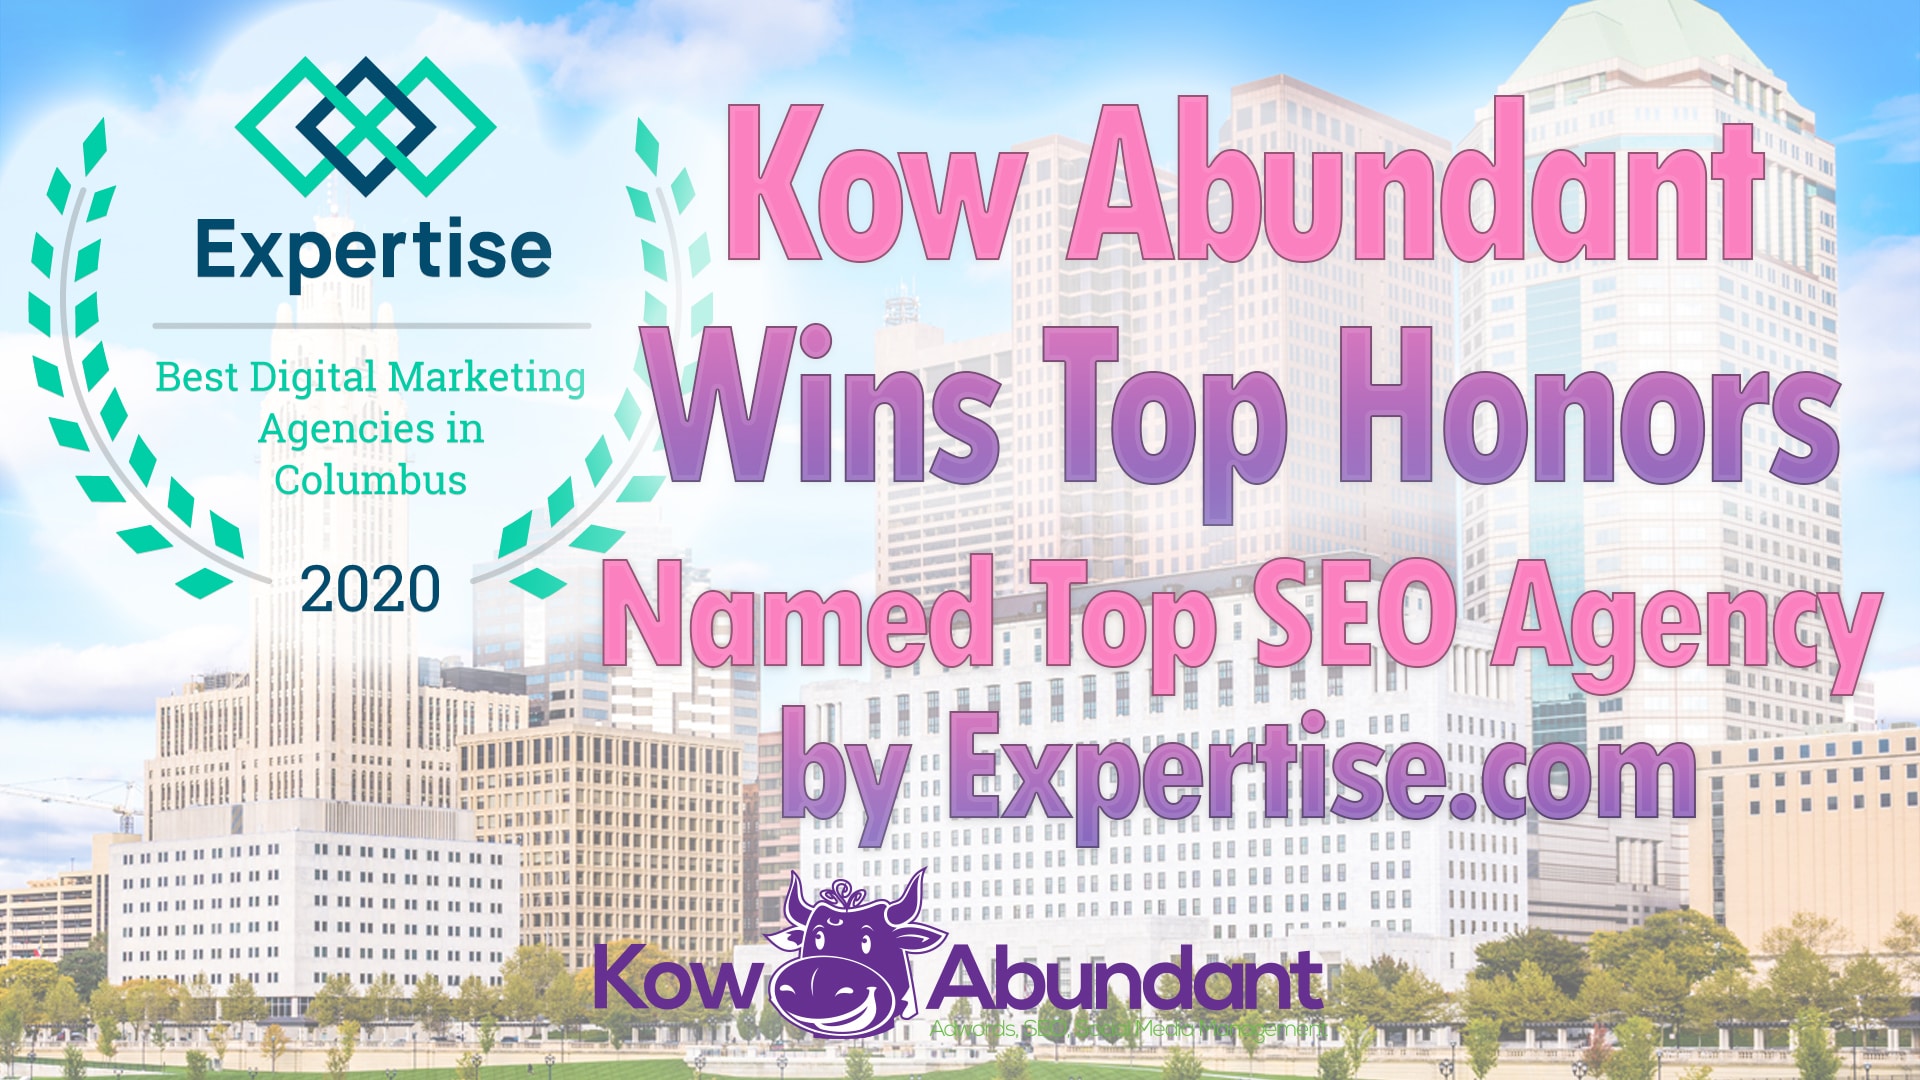 Kow Abundant Wins Top SEO agency by Expertise.com